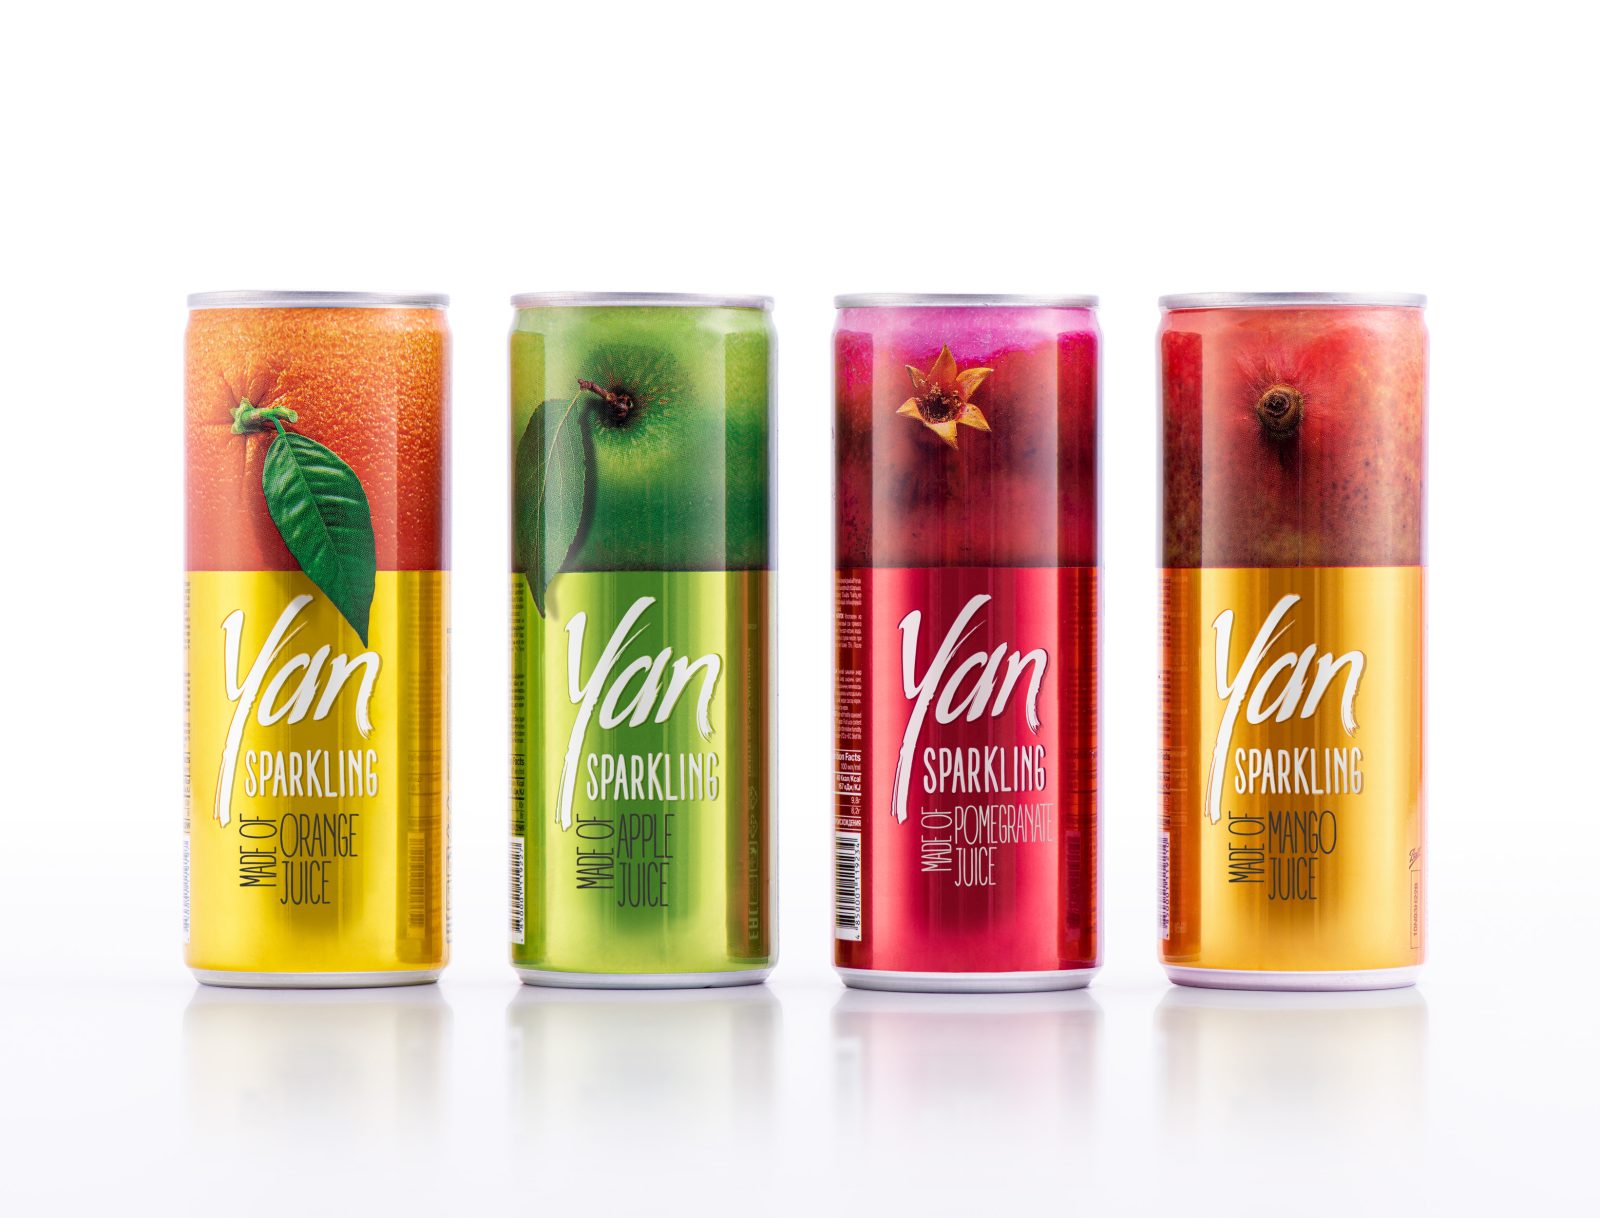 Yan Sparkling Packaging Design by Backbone Branding